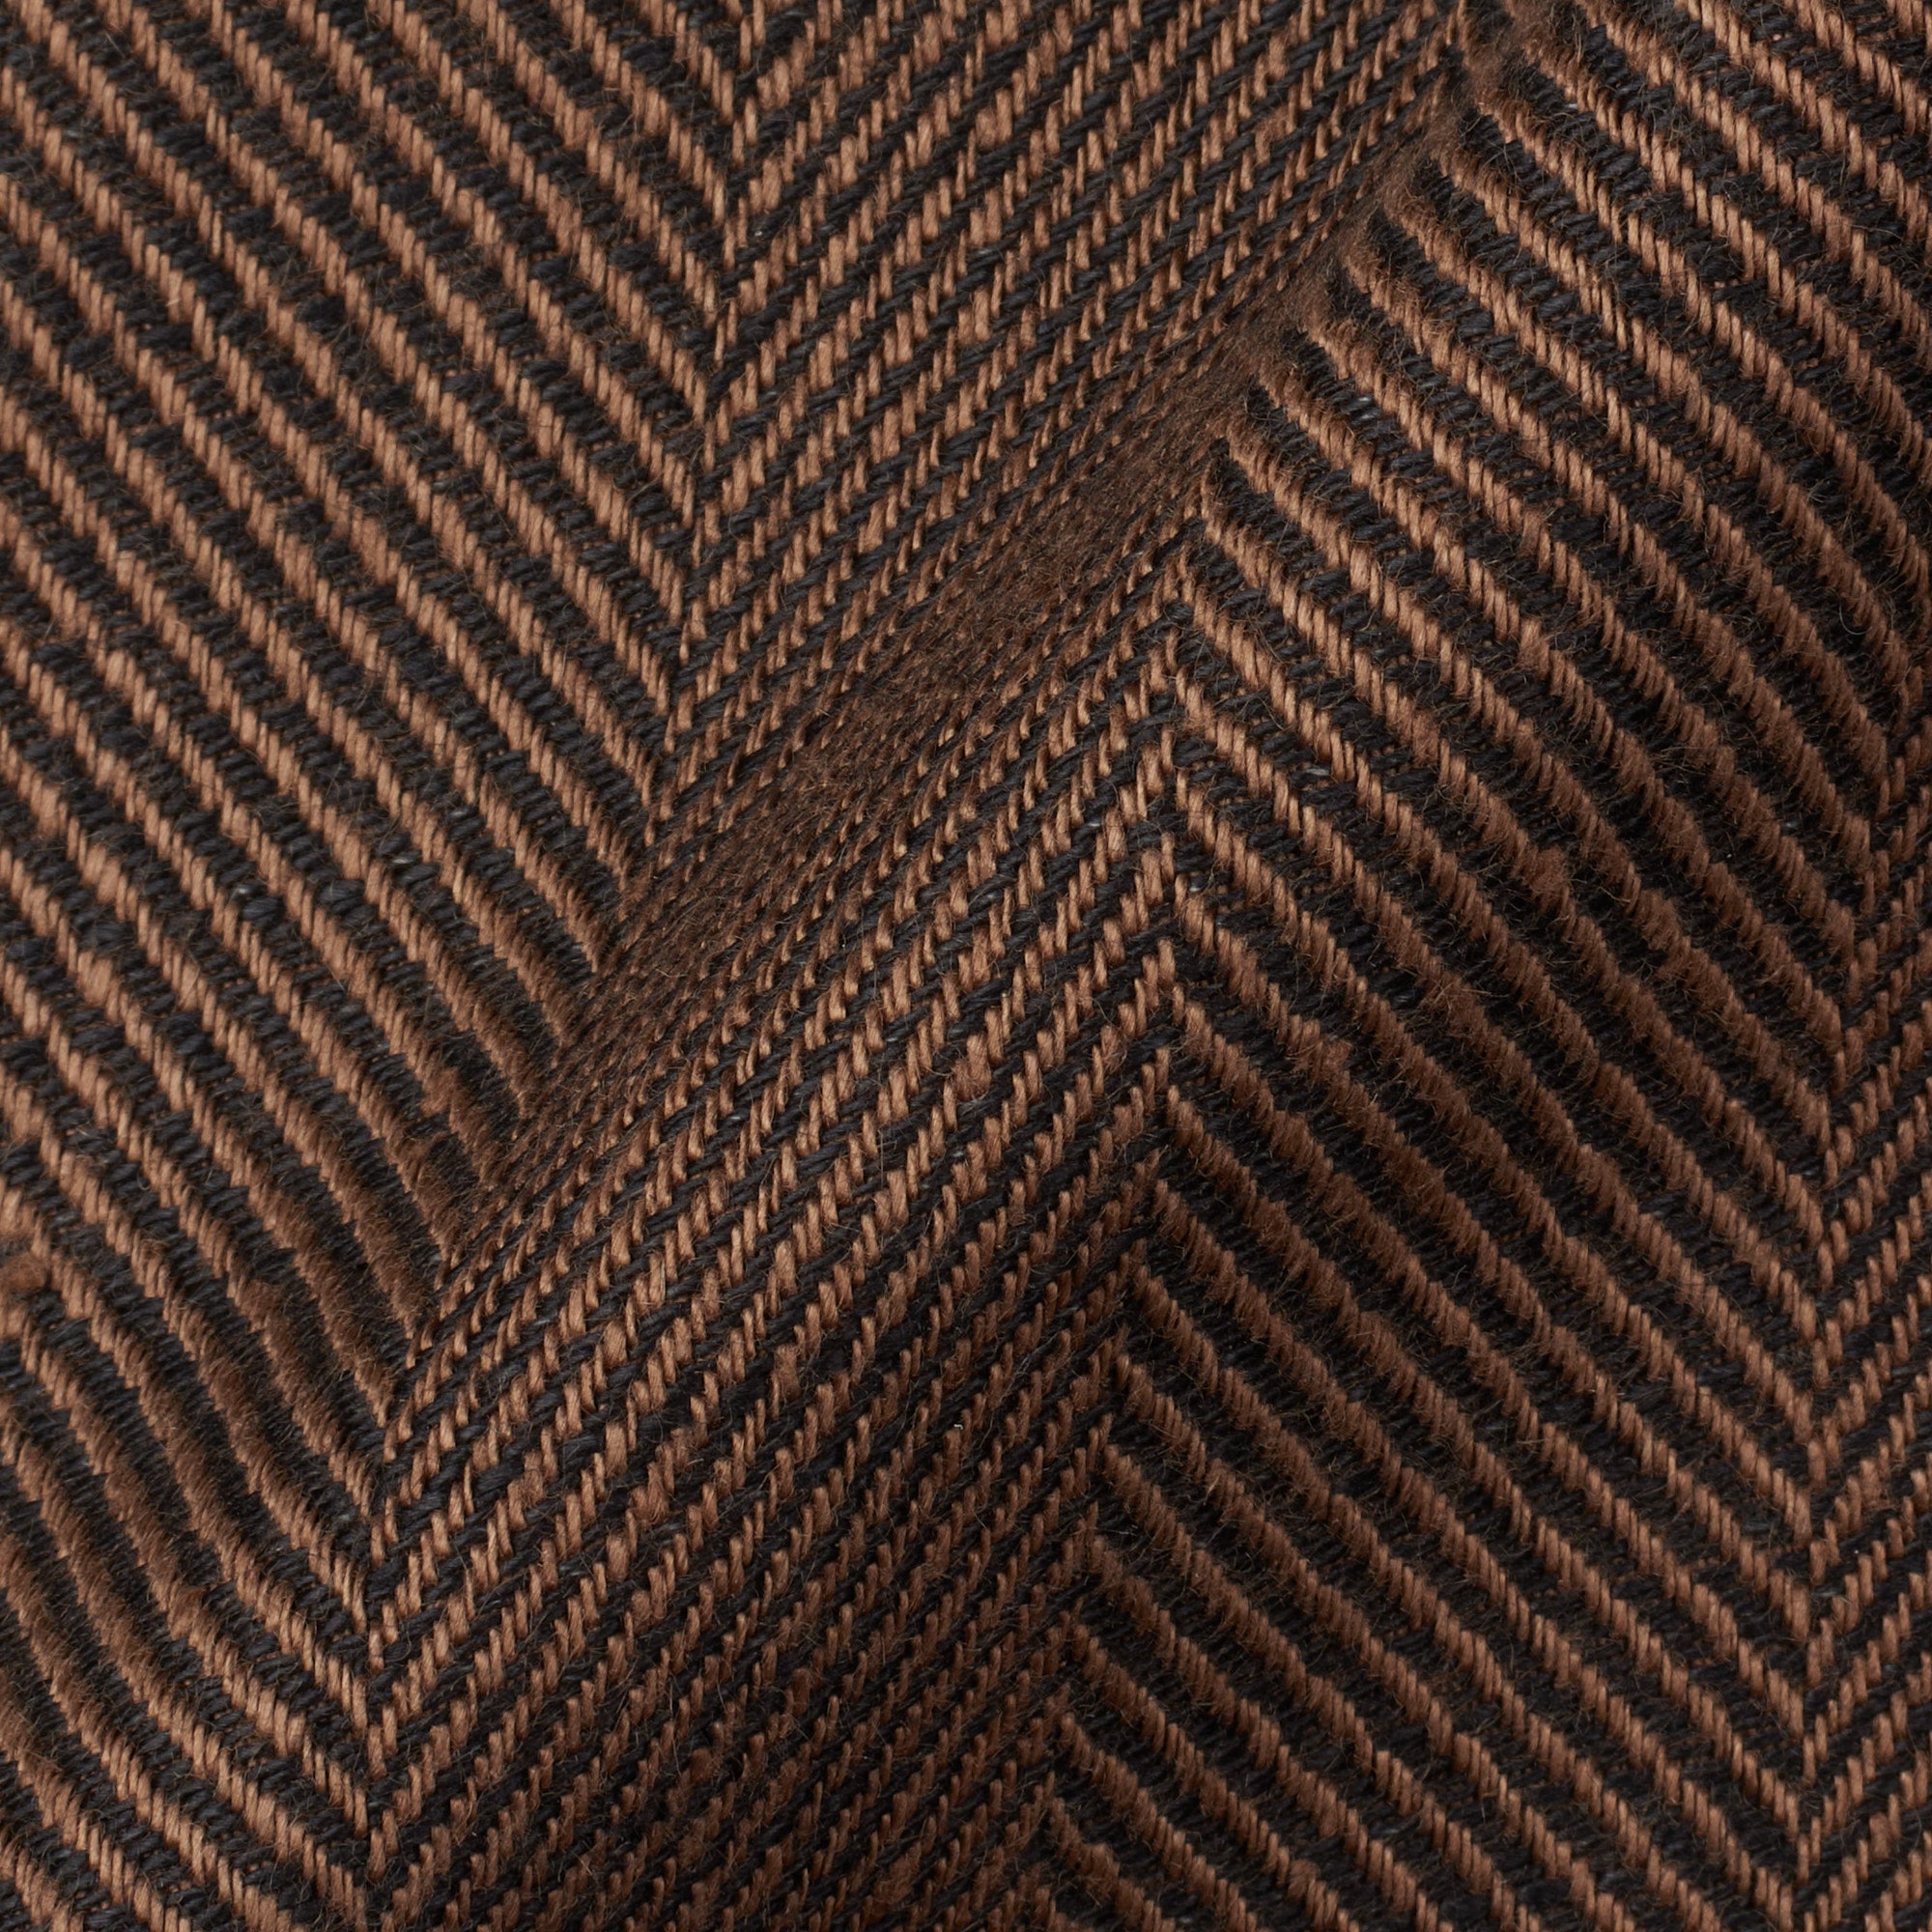 RUBINACCI LH Handmade Bespoke Brown Herringbone Cotton-Linen Jacket EU 50 NEW US 40